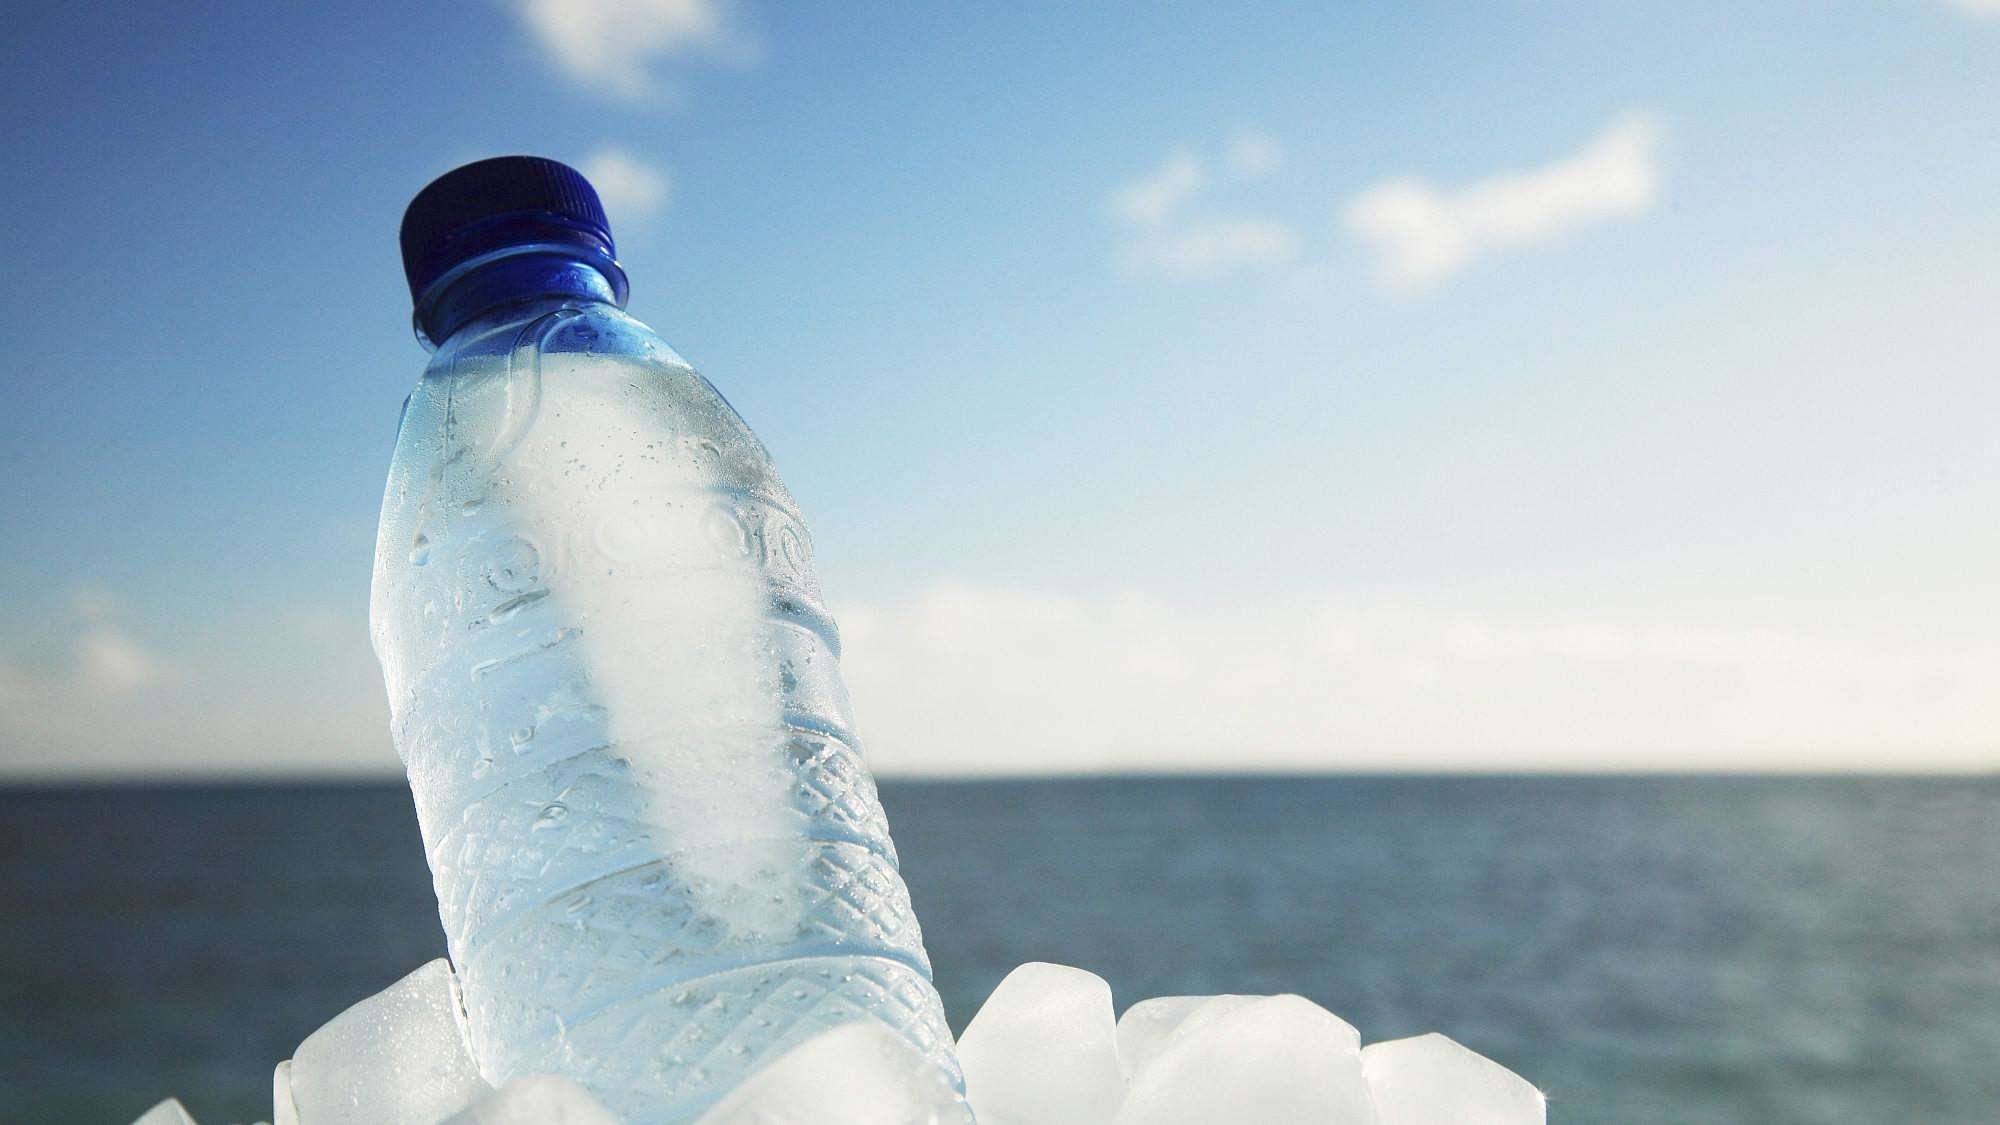 पीने लायक हो सकेगा समुद्री खारा पानी, वैज्ञानिकों ने बनाया विशेष फिल्टर